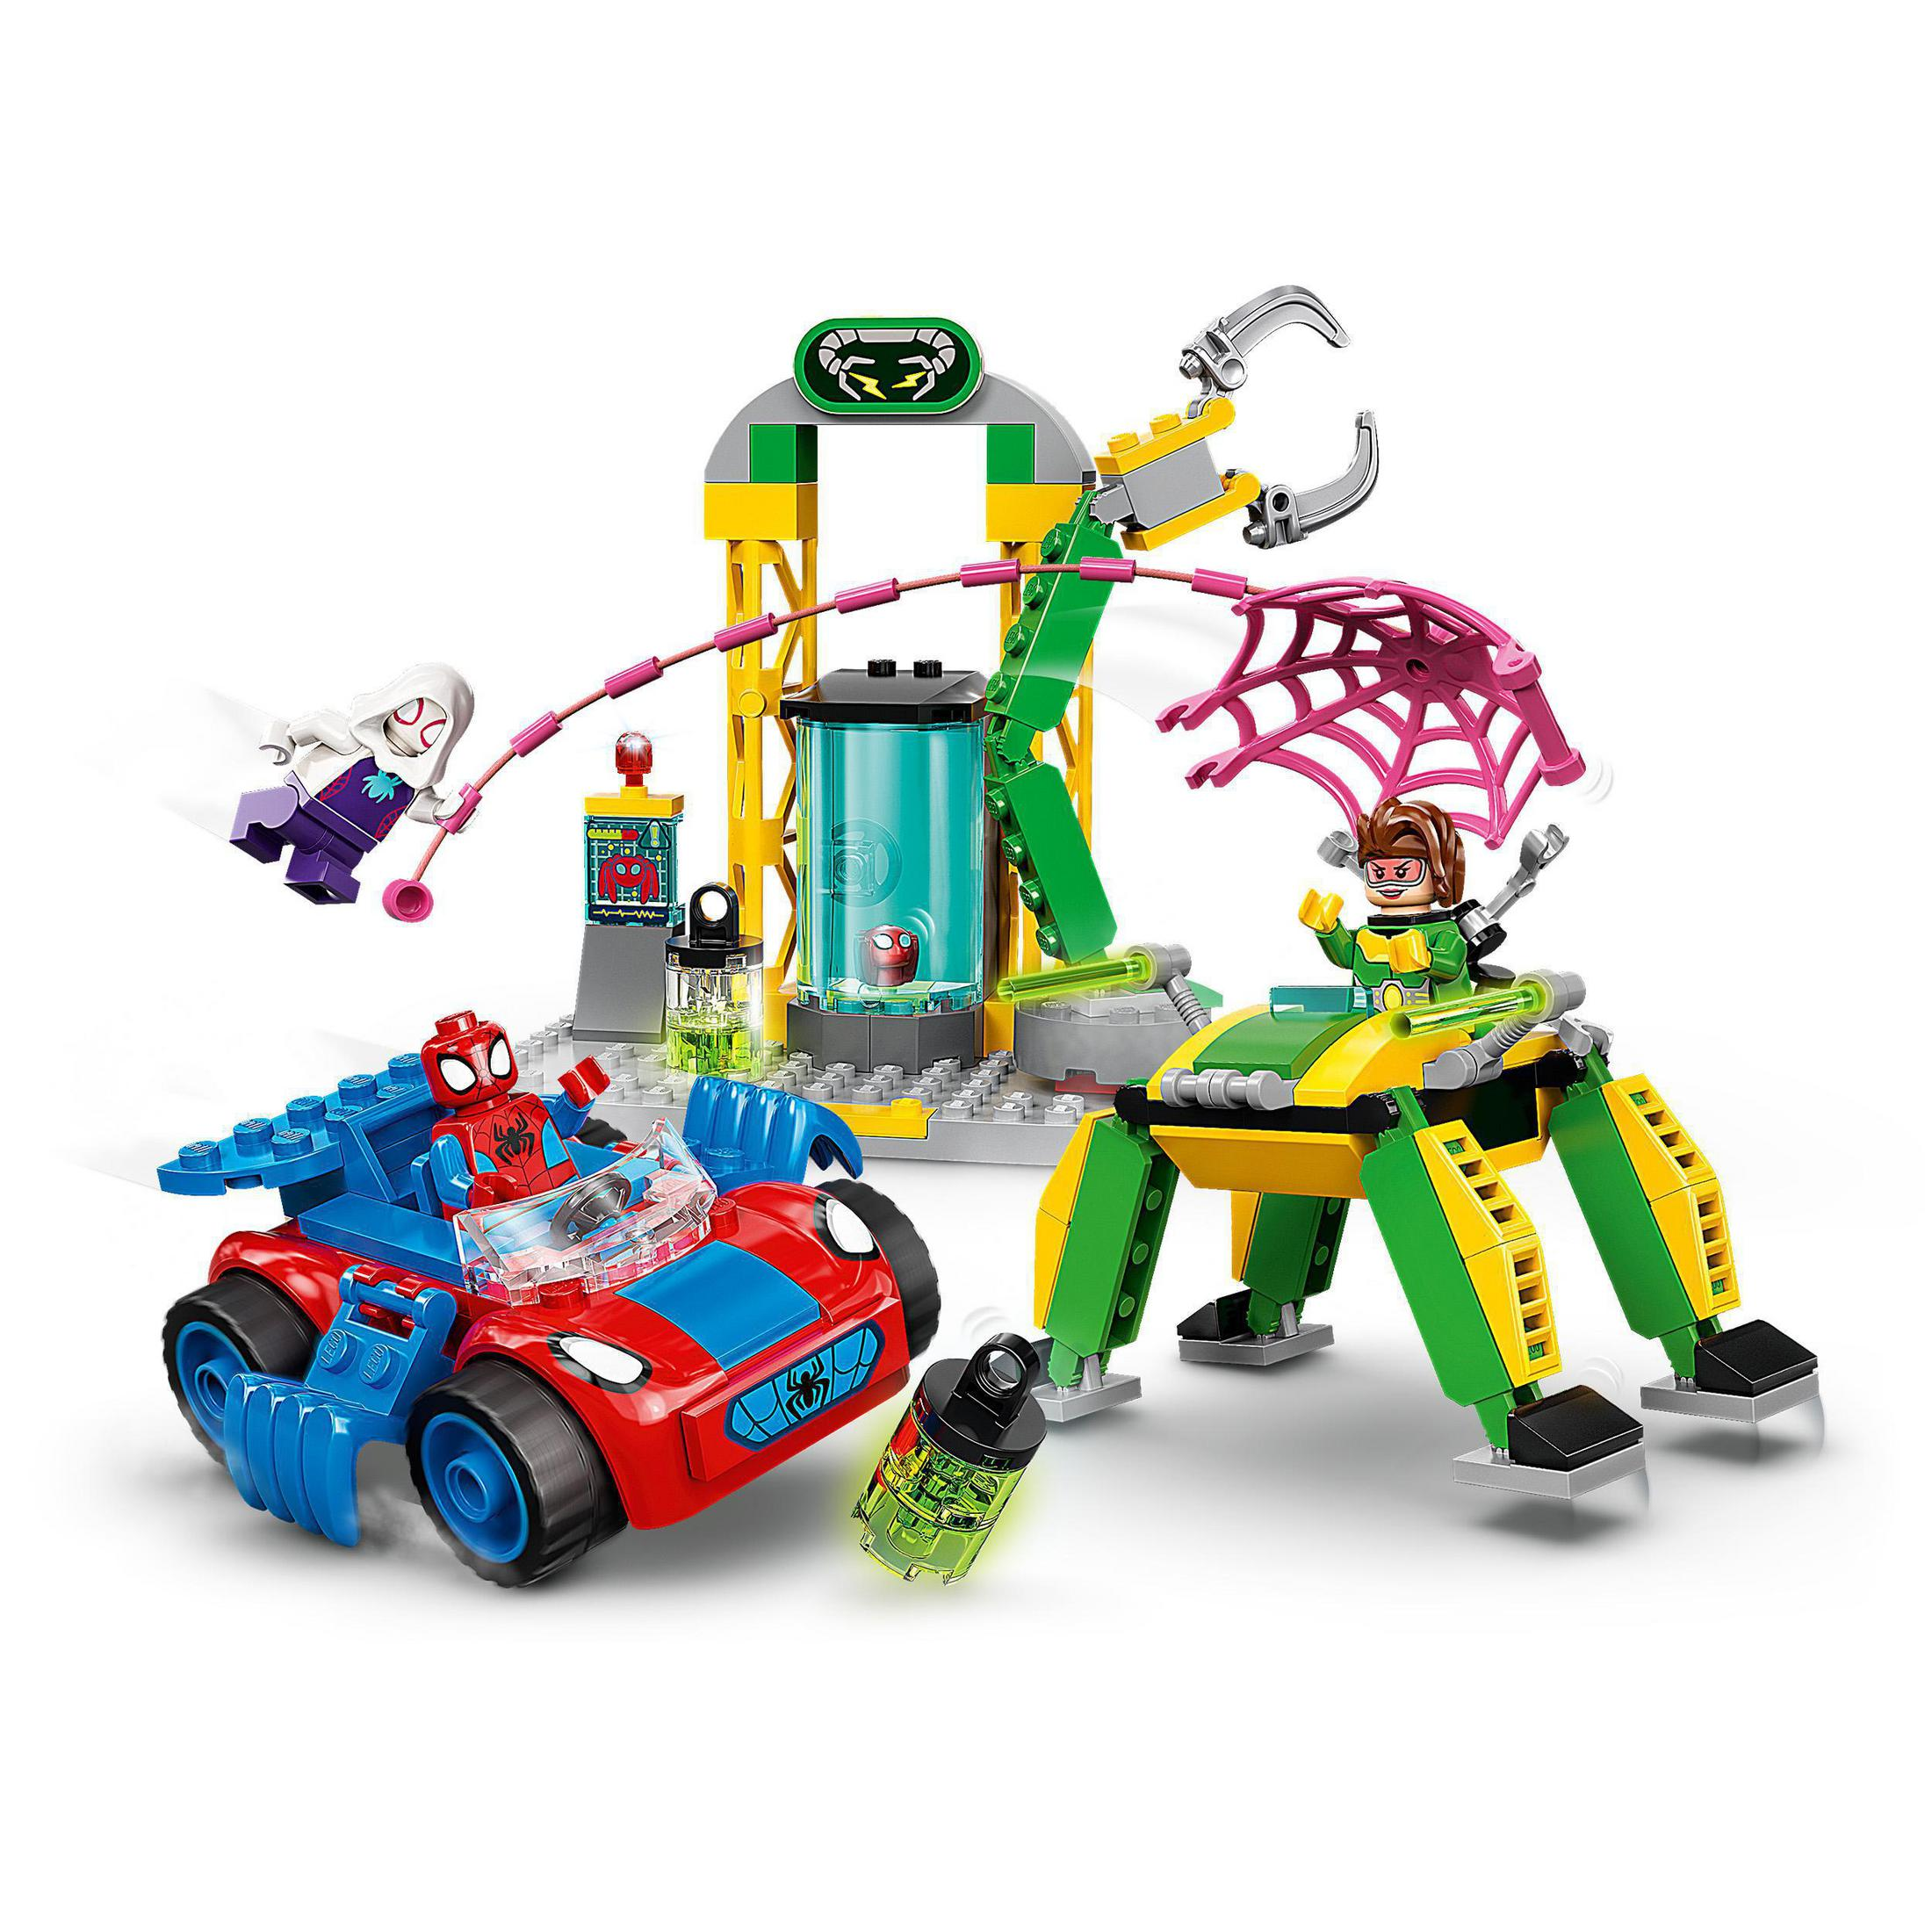 IN Mehrfarbig SPIDER-MAN DOC Bausatz, 10783 OCKS LEGO LABOR